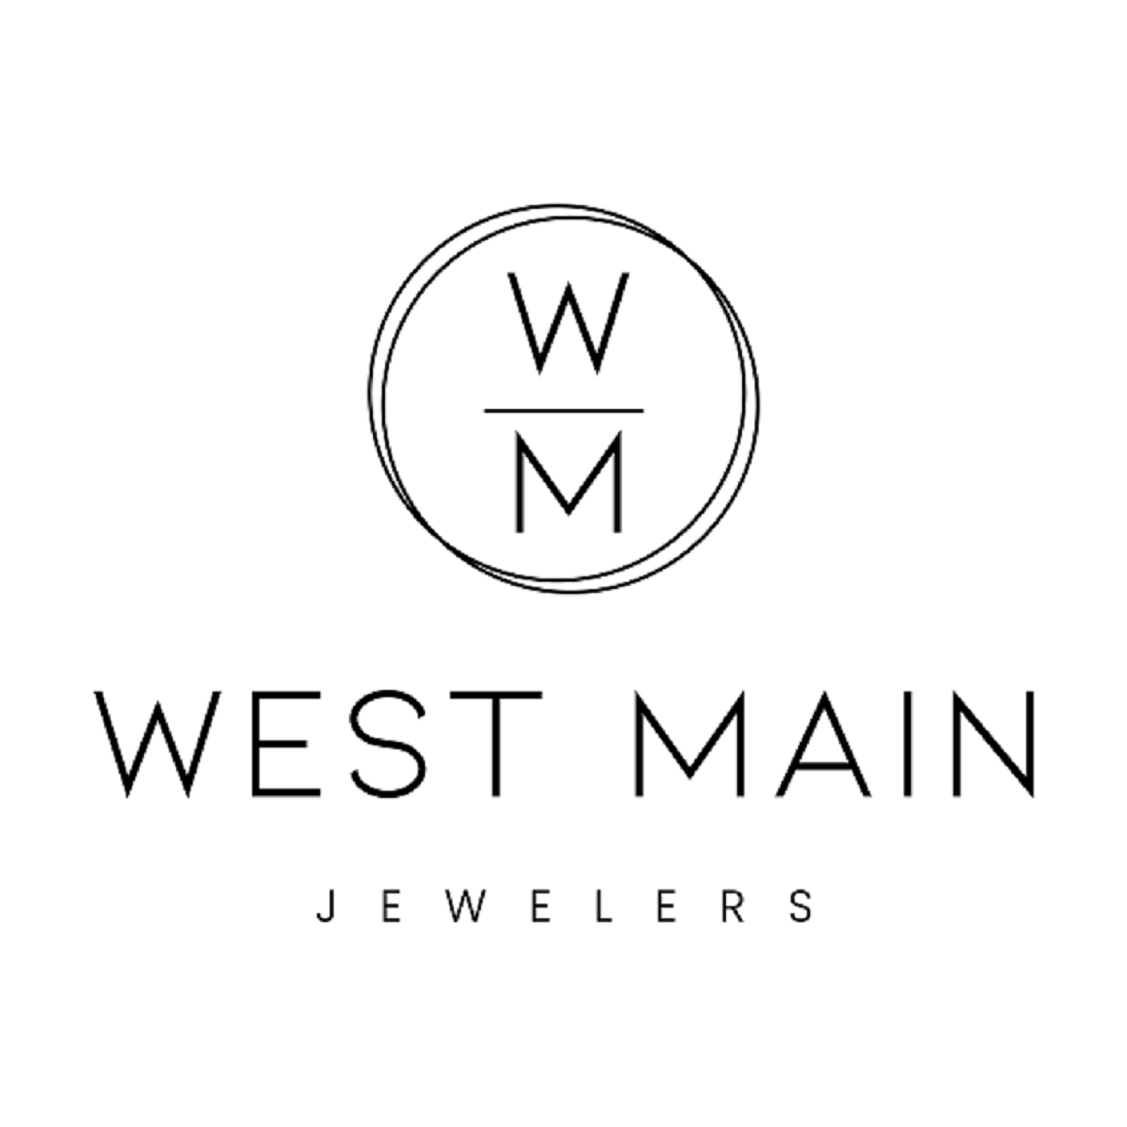 West Main Jewelers